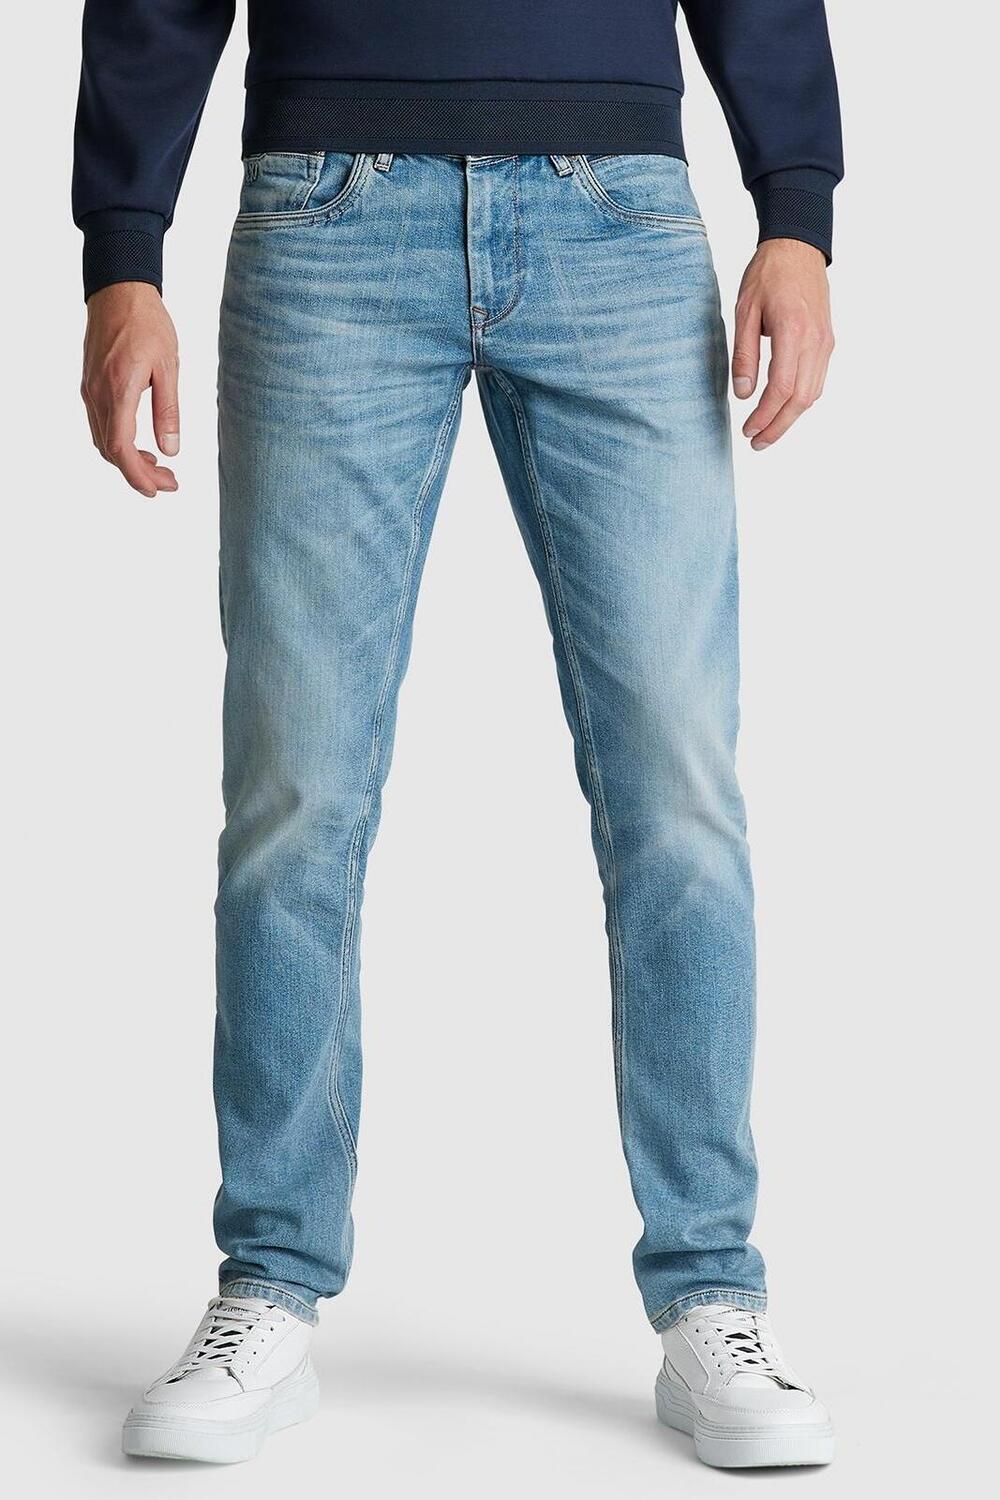 xv jeans ptr150 legend jeans lmd